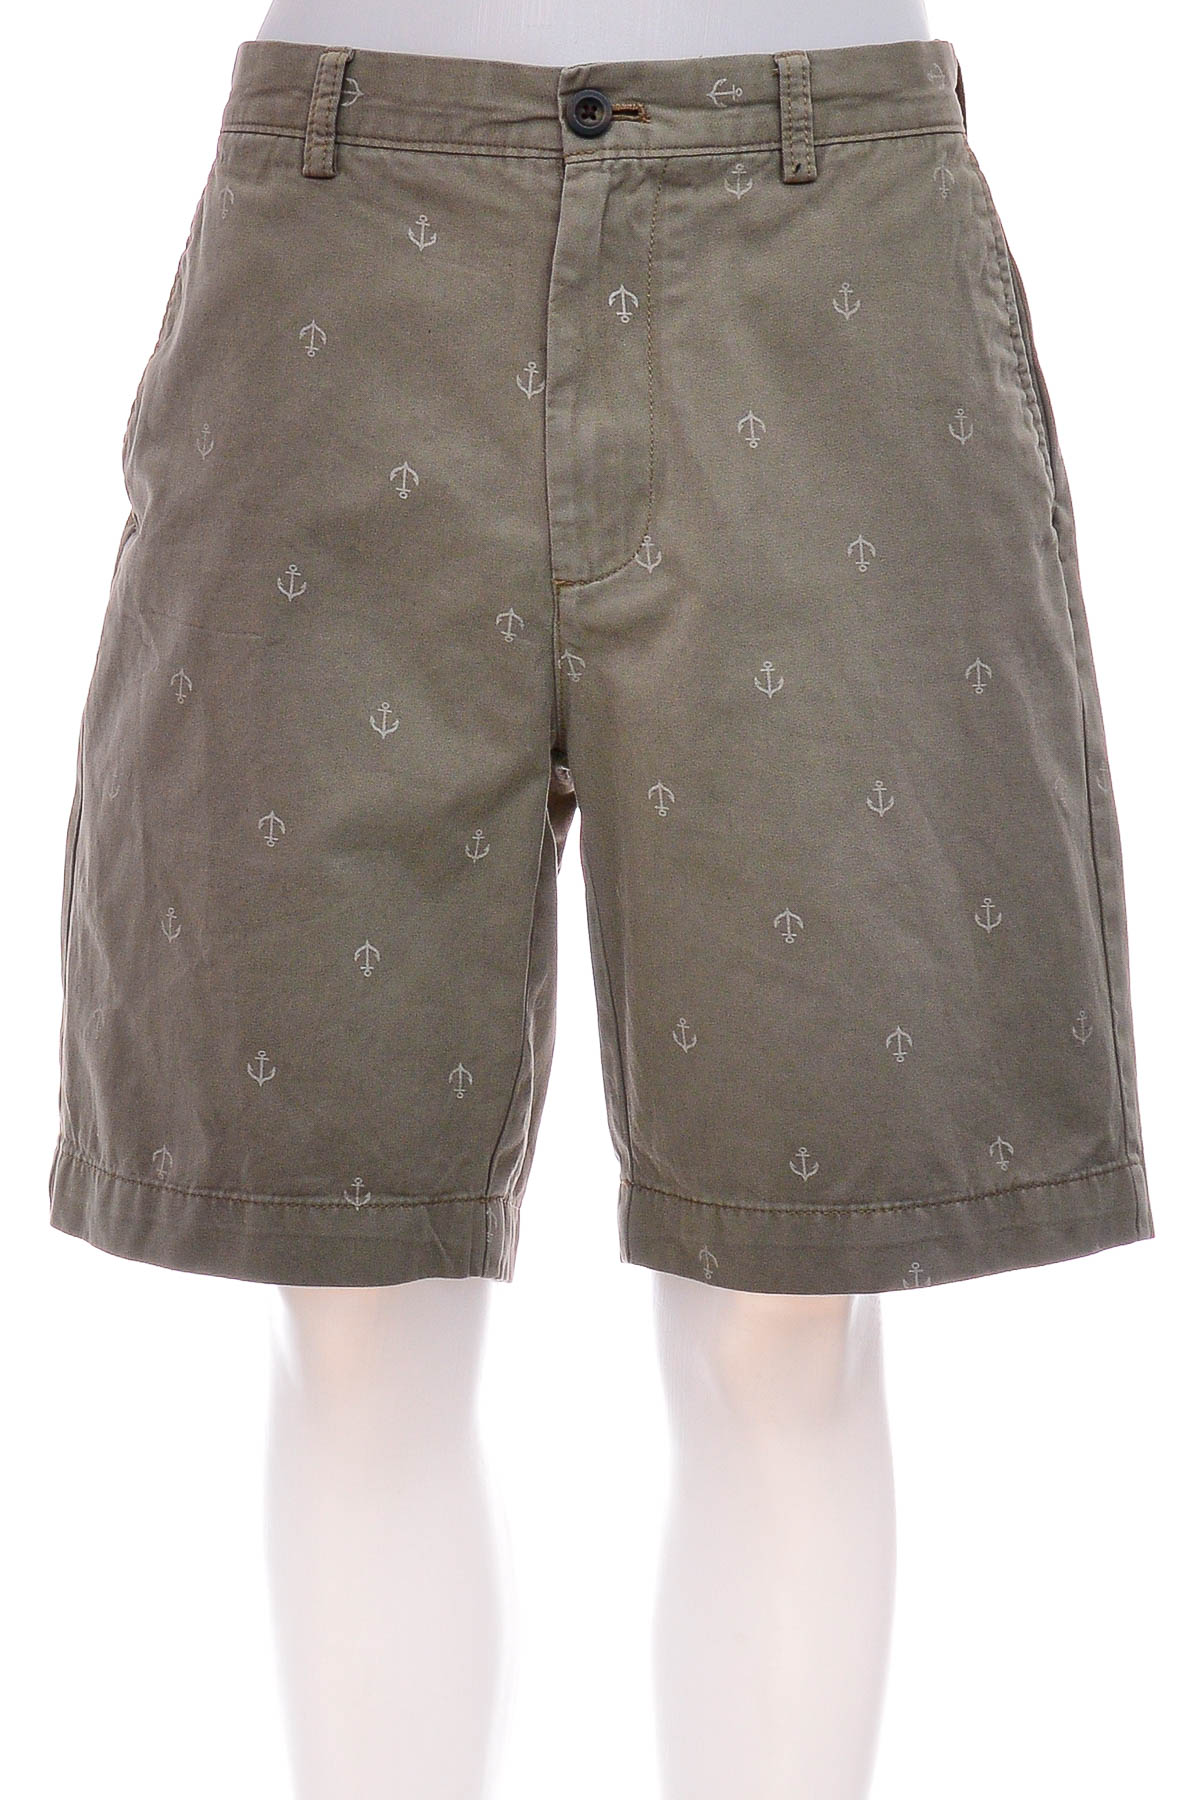 Men's shorts - Amazon Essentials - 0